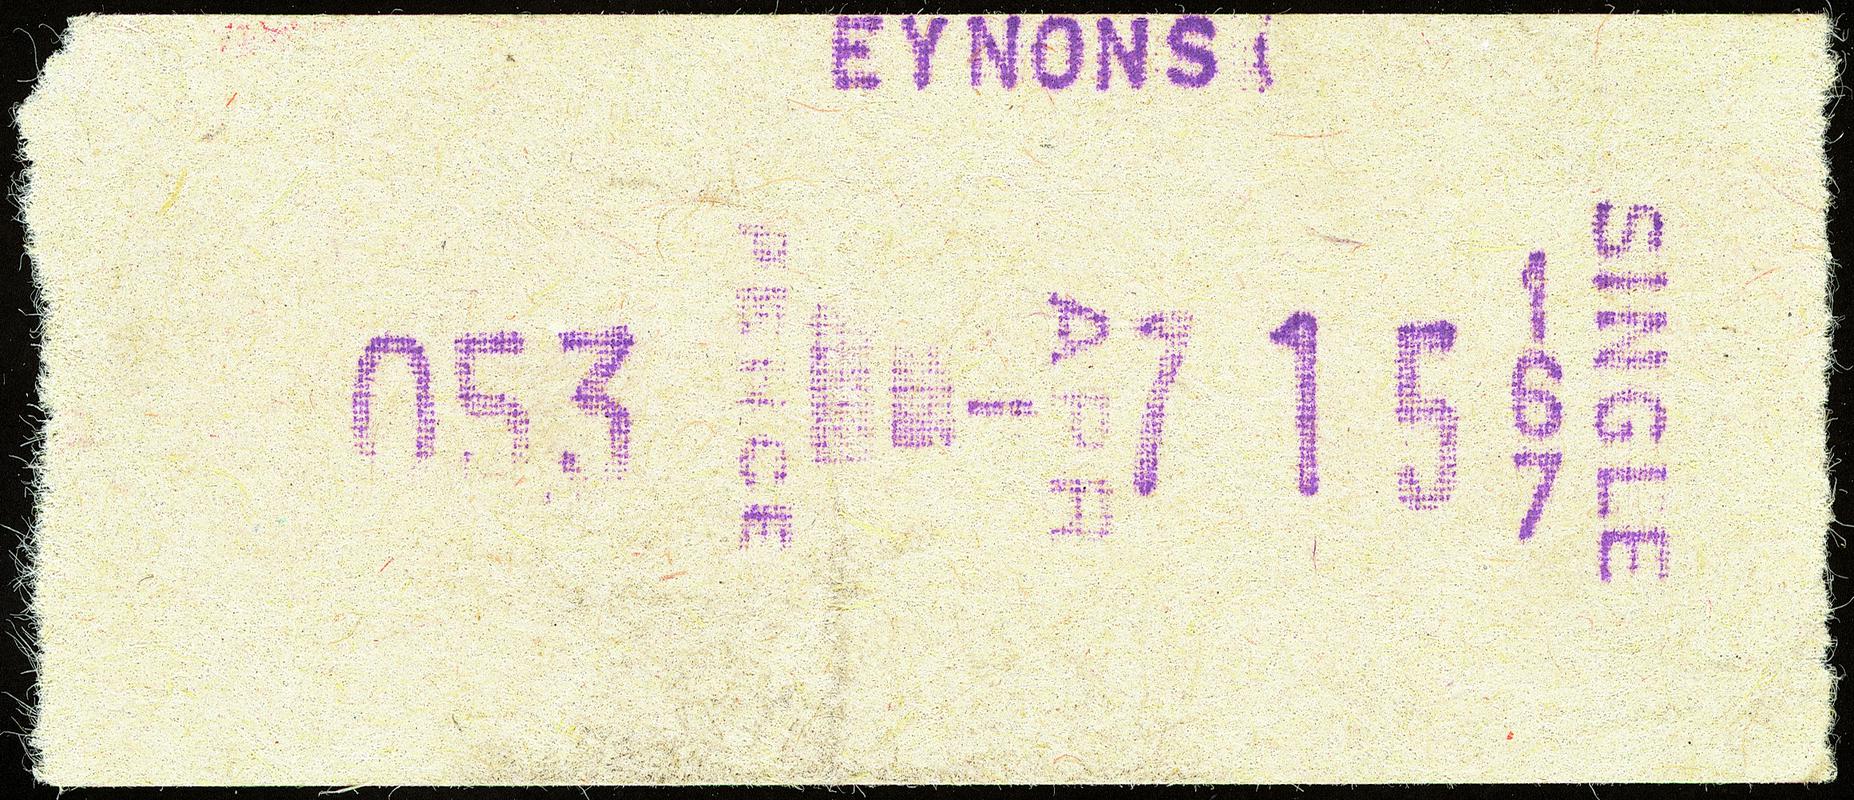 Eynons bus ticket